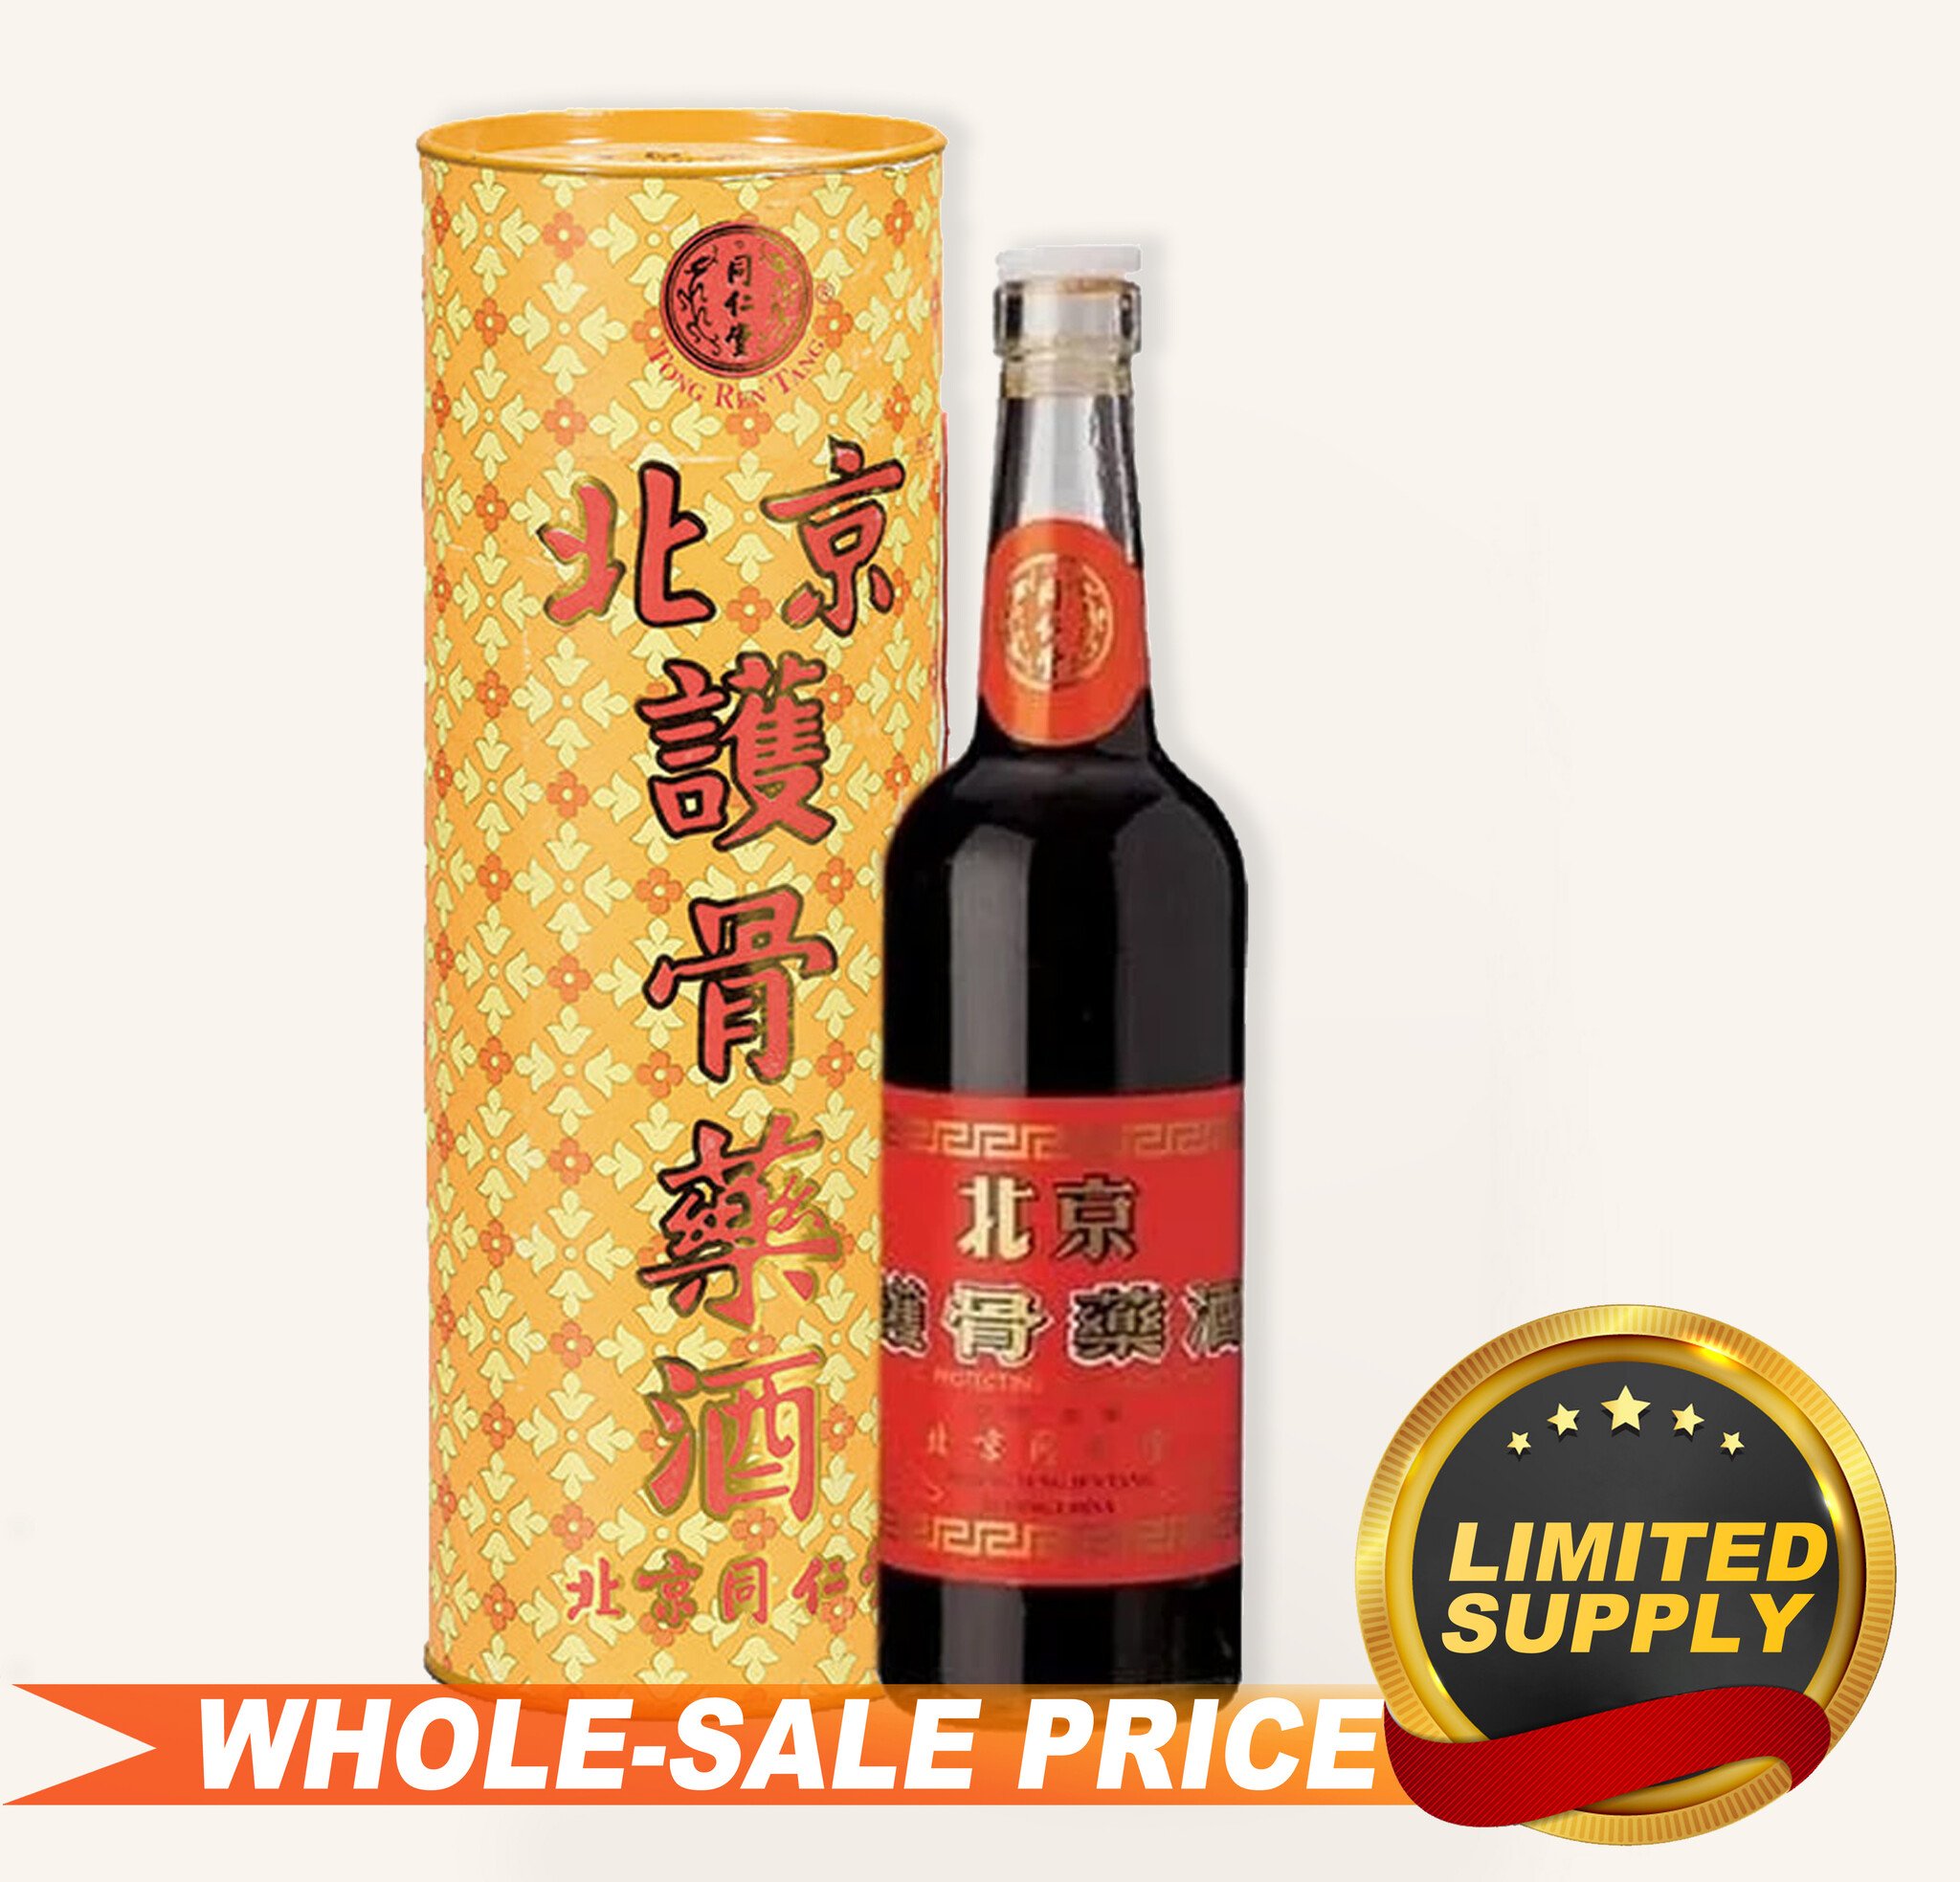 Tiger Bone Royal King Premium Hu Gu Jiu 皇牌护骨酒750ml $80 FREE